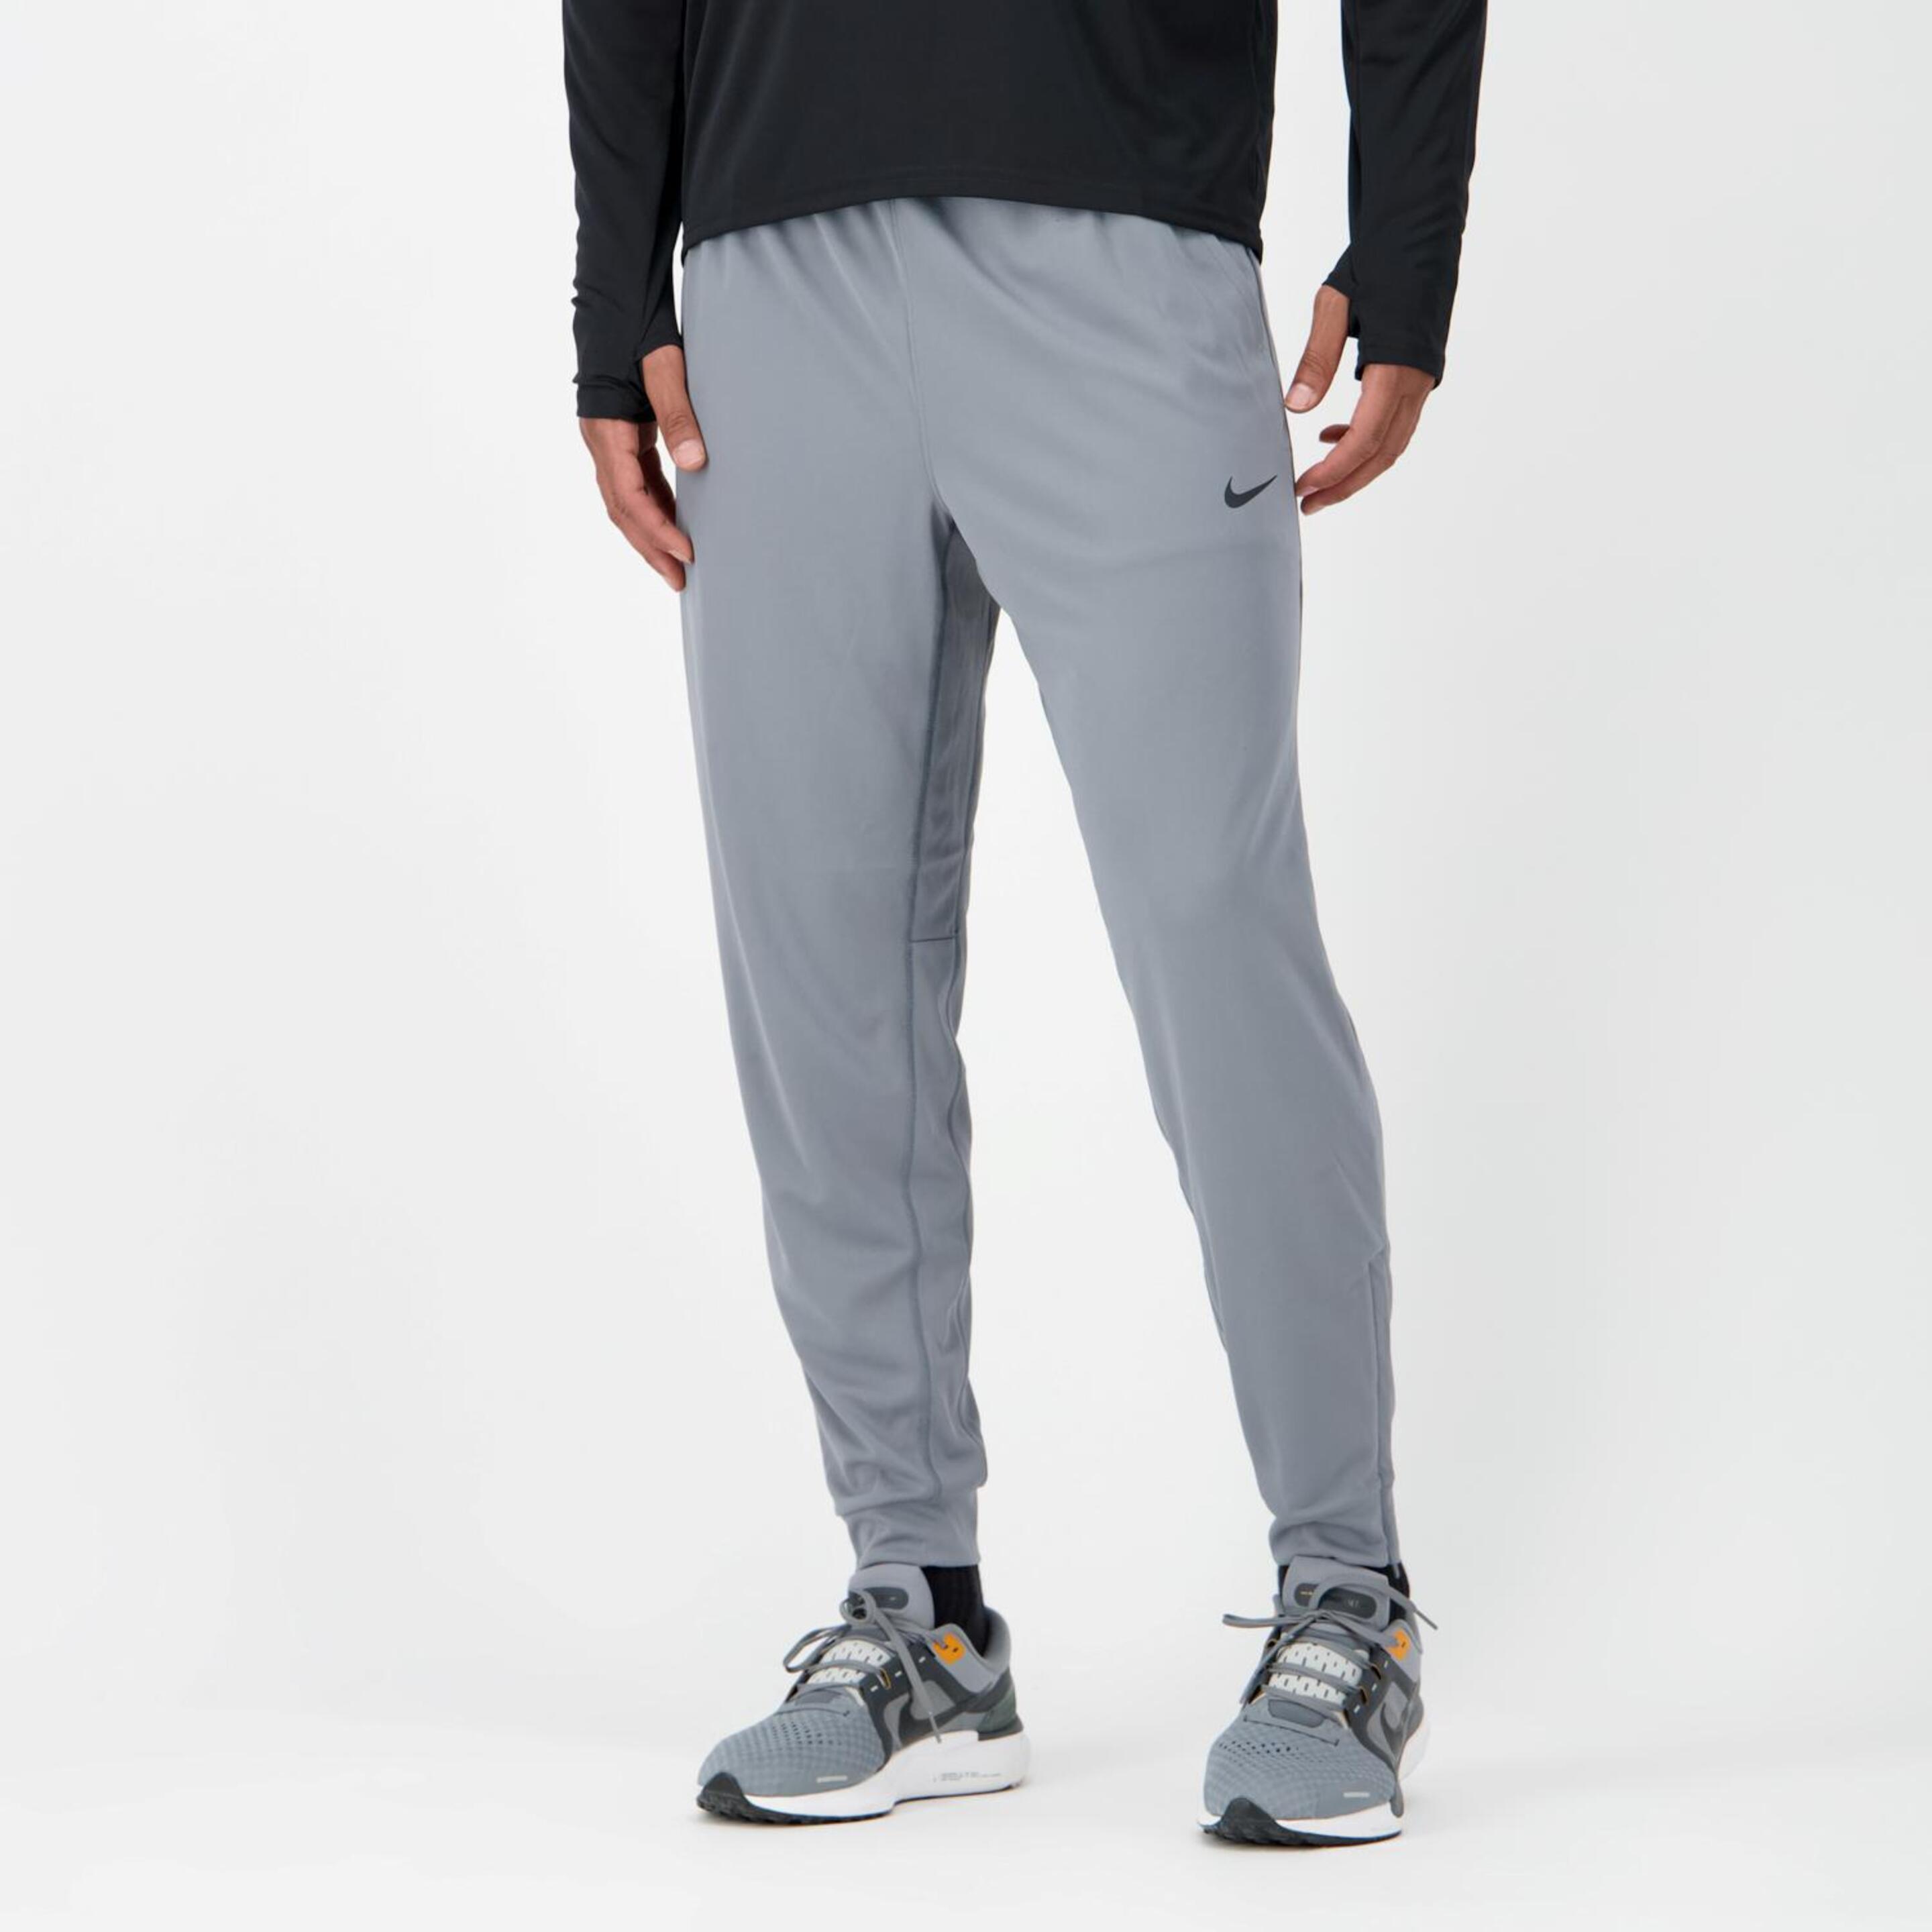 Nike Dri-fit Totality - gris - Pantalón Running Hombre